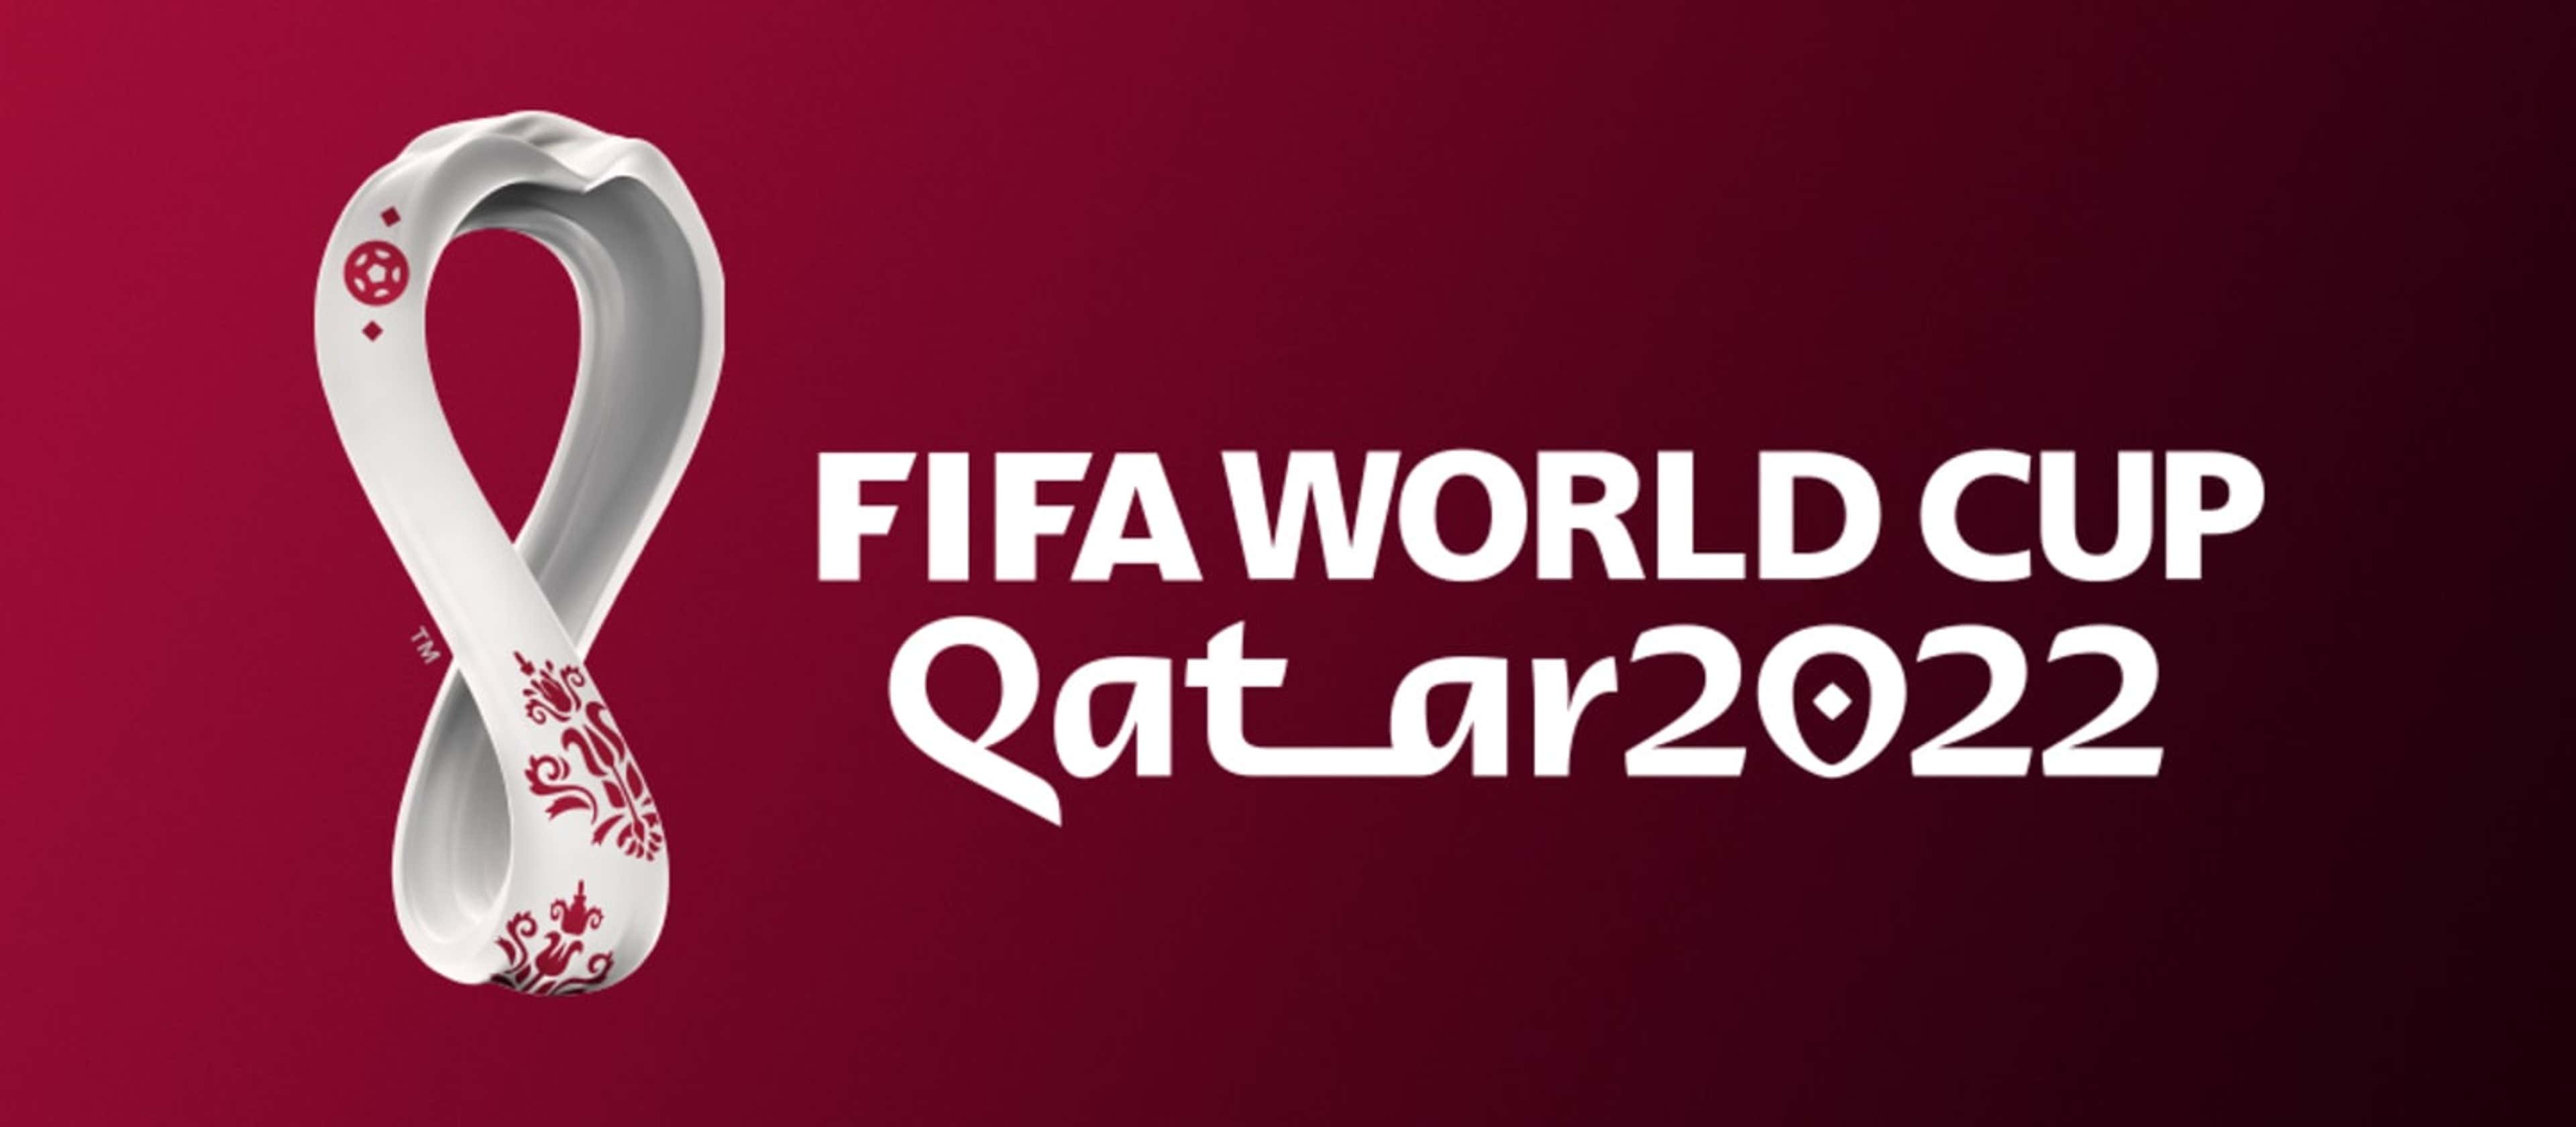 FIFA World Cup: 2022 Qatar